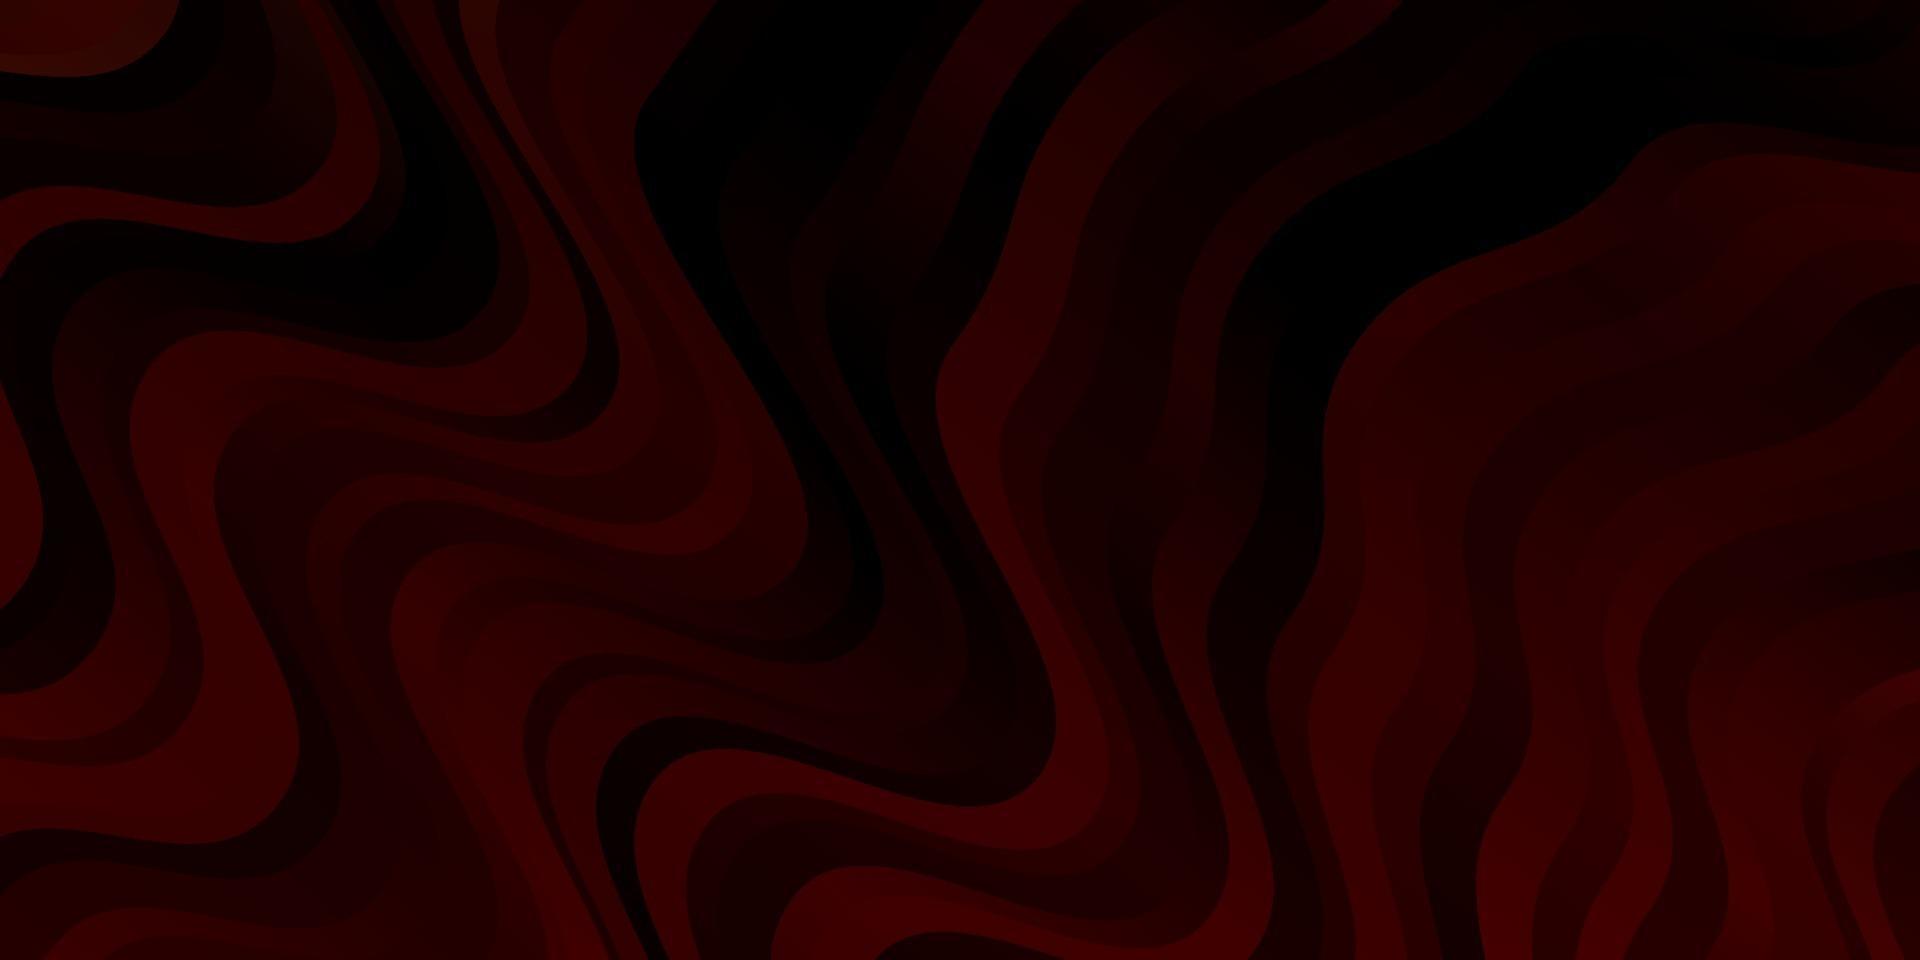 Dark Red vector background with bent lines.